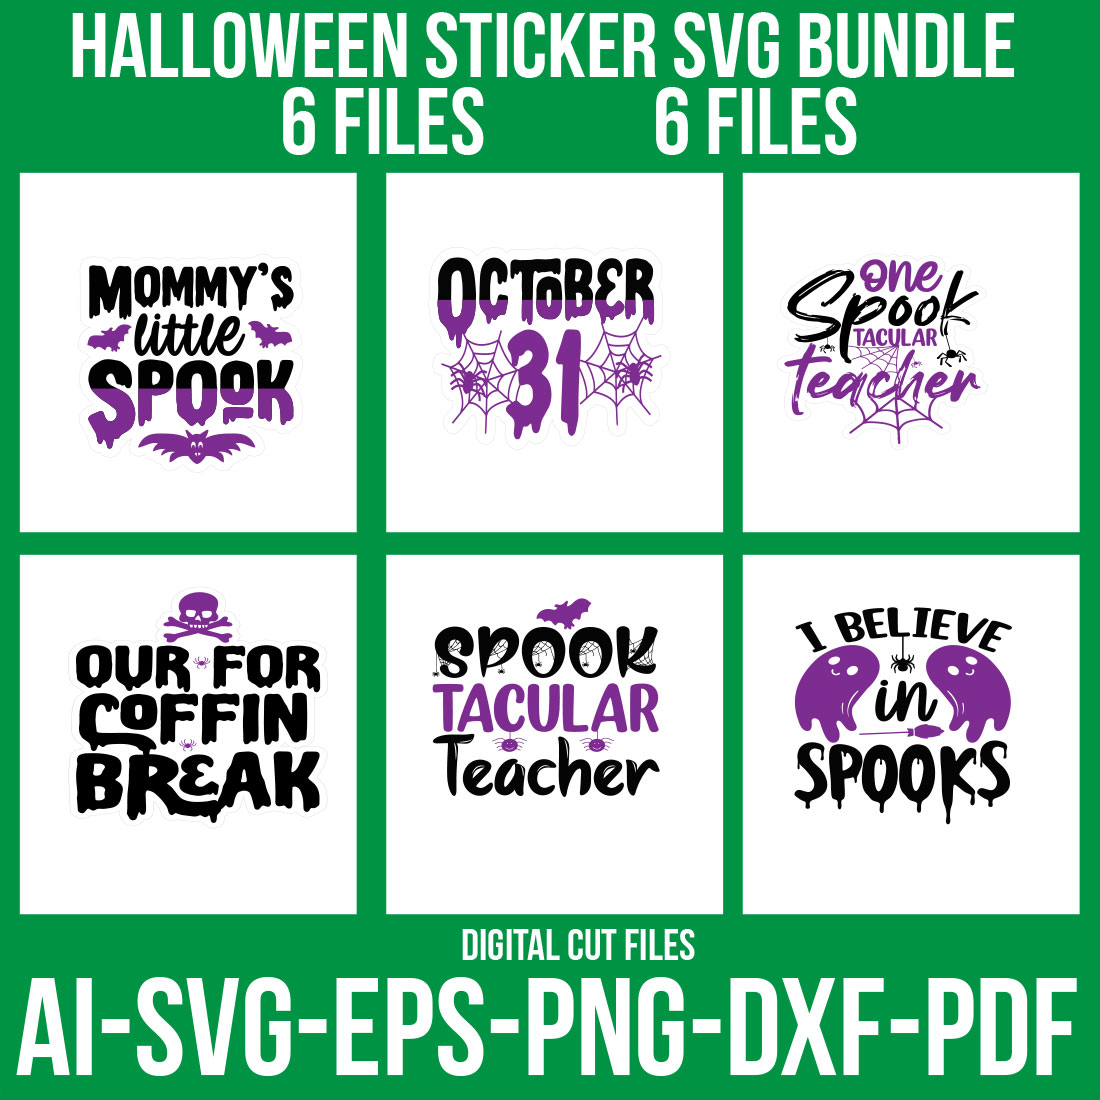 Halloween Sticker SVG Bundle cover image.